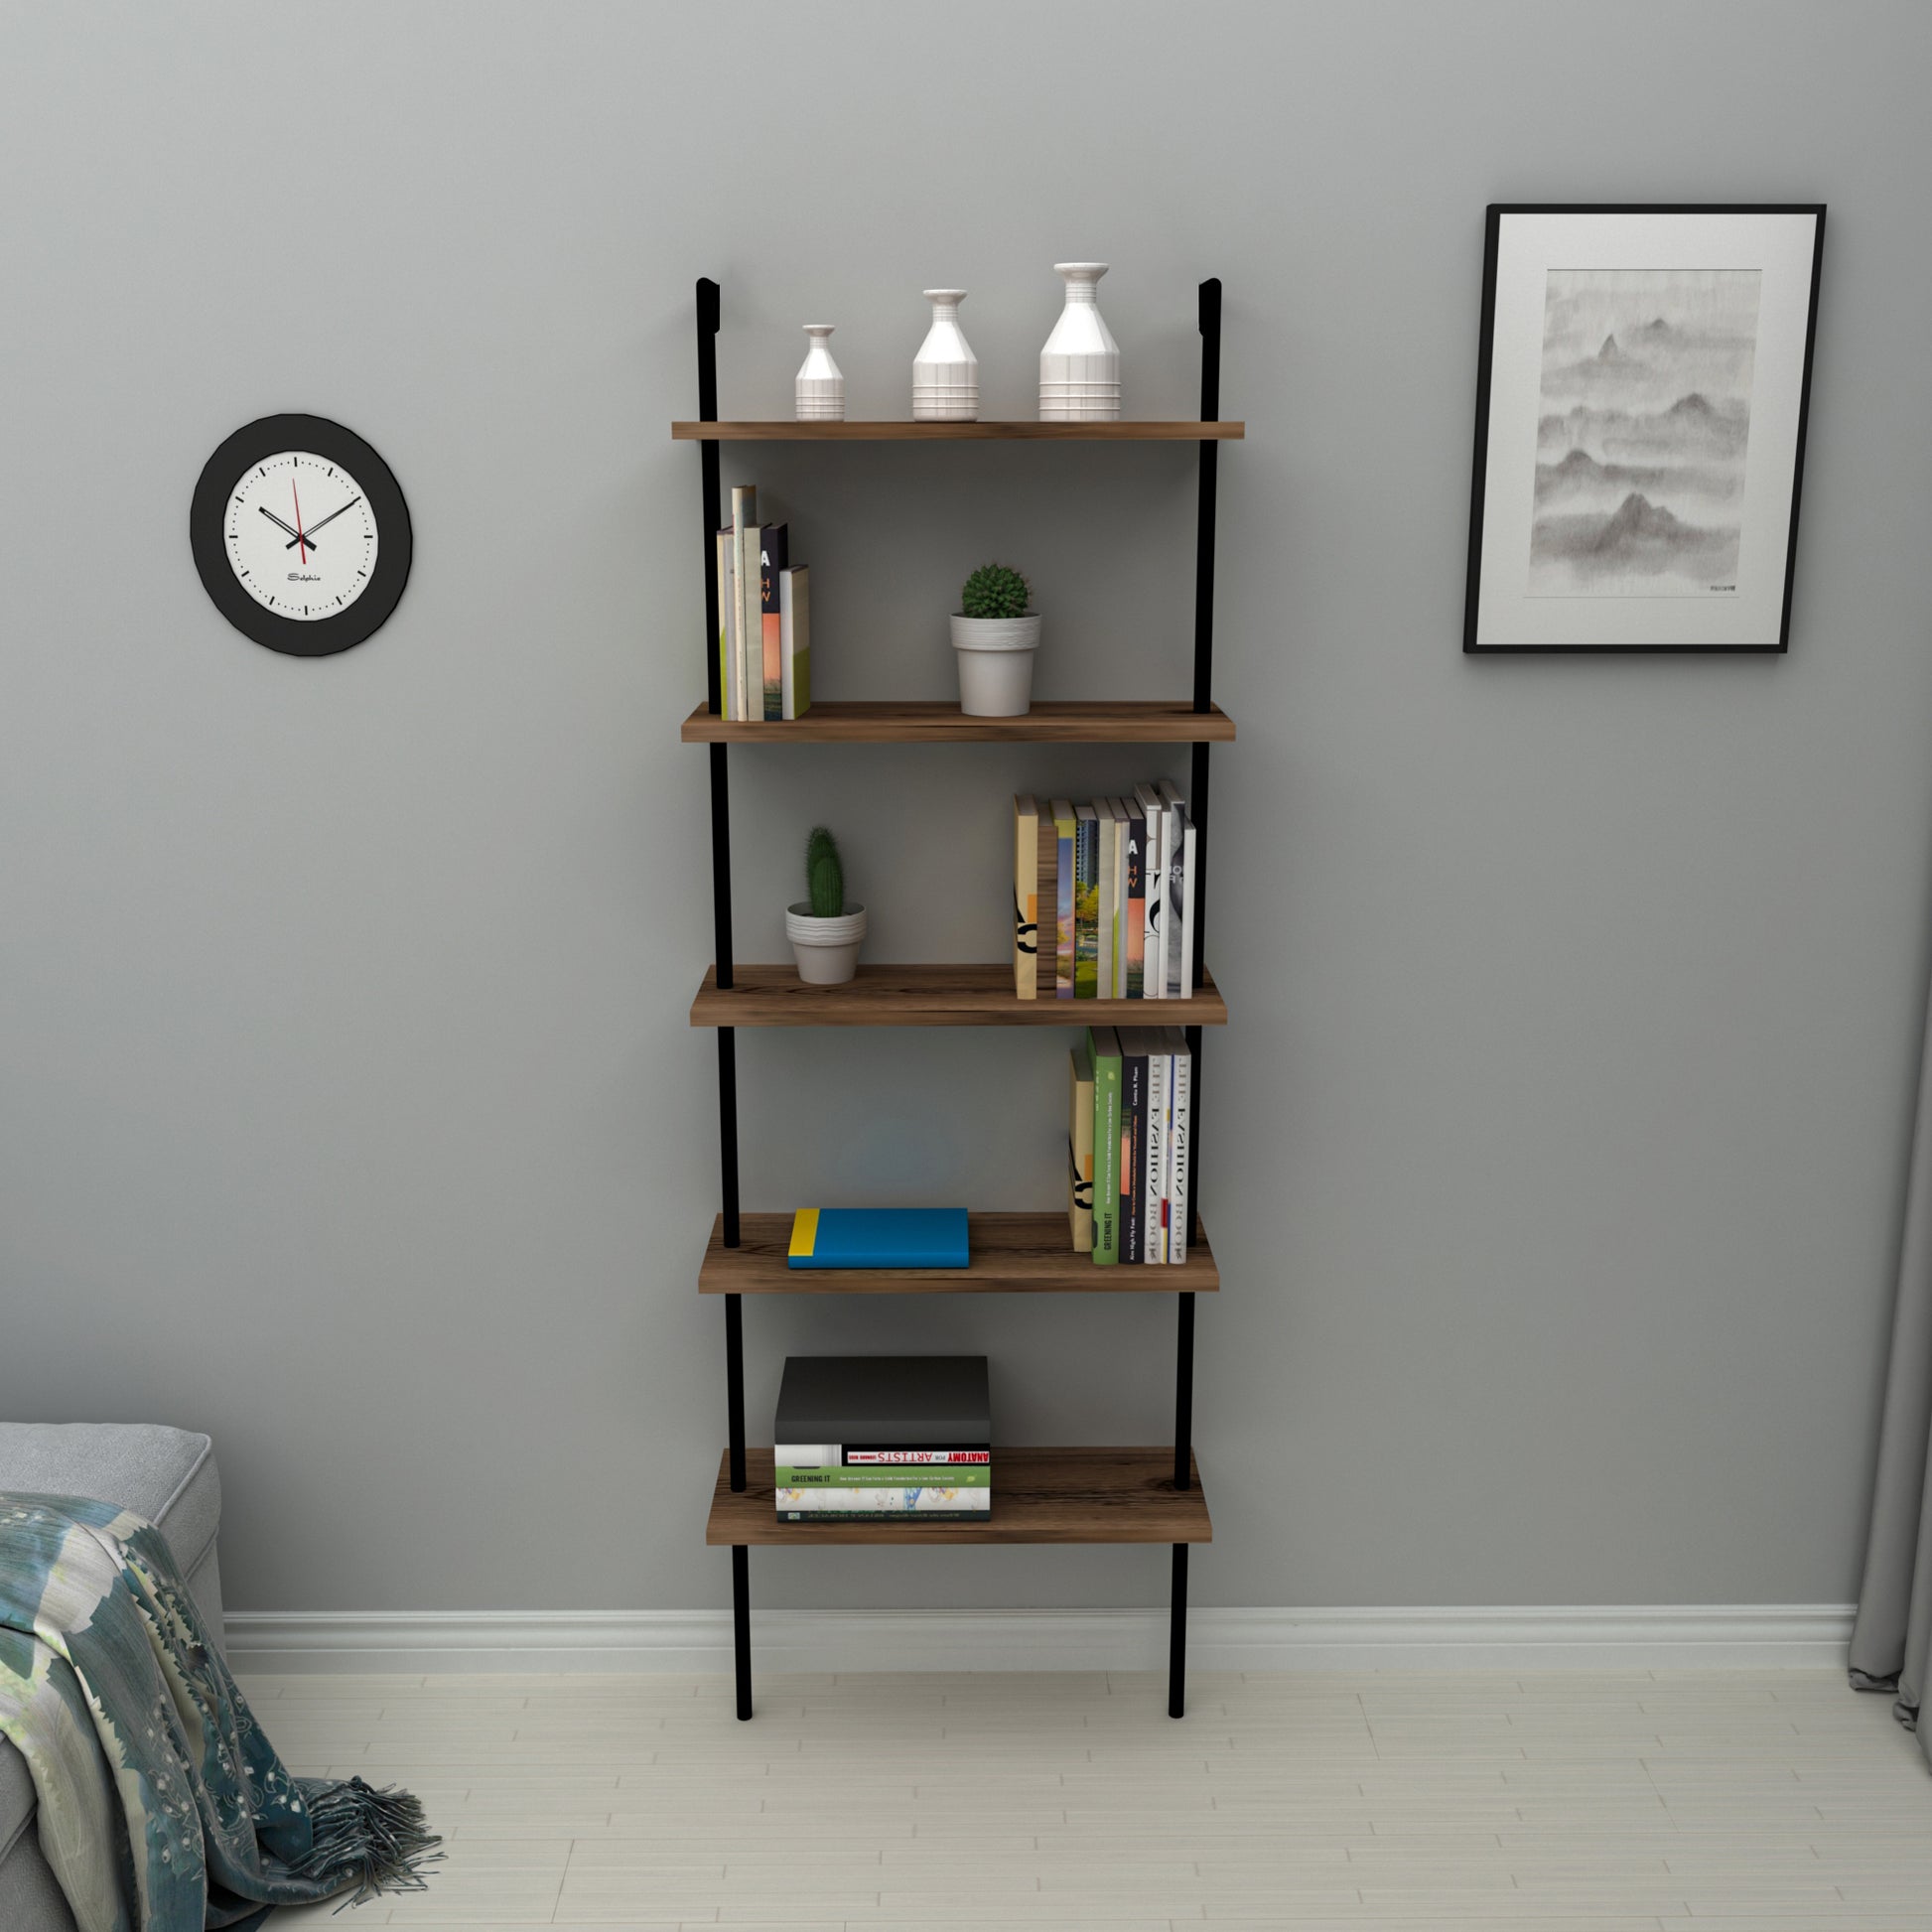 Bookcase, Bookshelf, Floating Bookcase, Floating Bookshelf, Shelving Unit, Shelf, Furniture, Home, Office, Living room, Study room